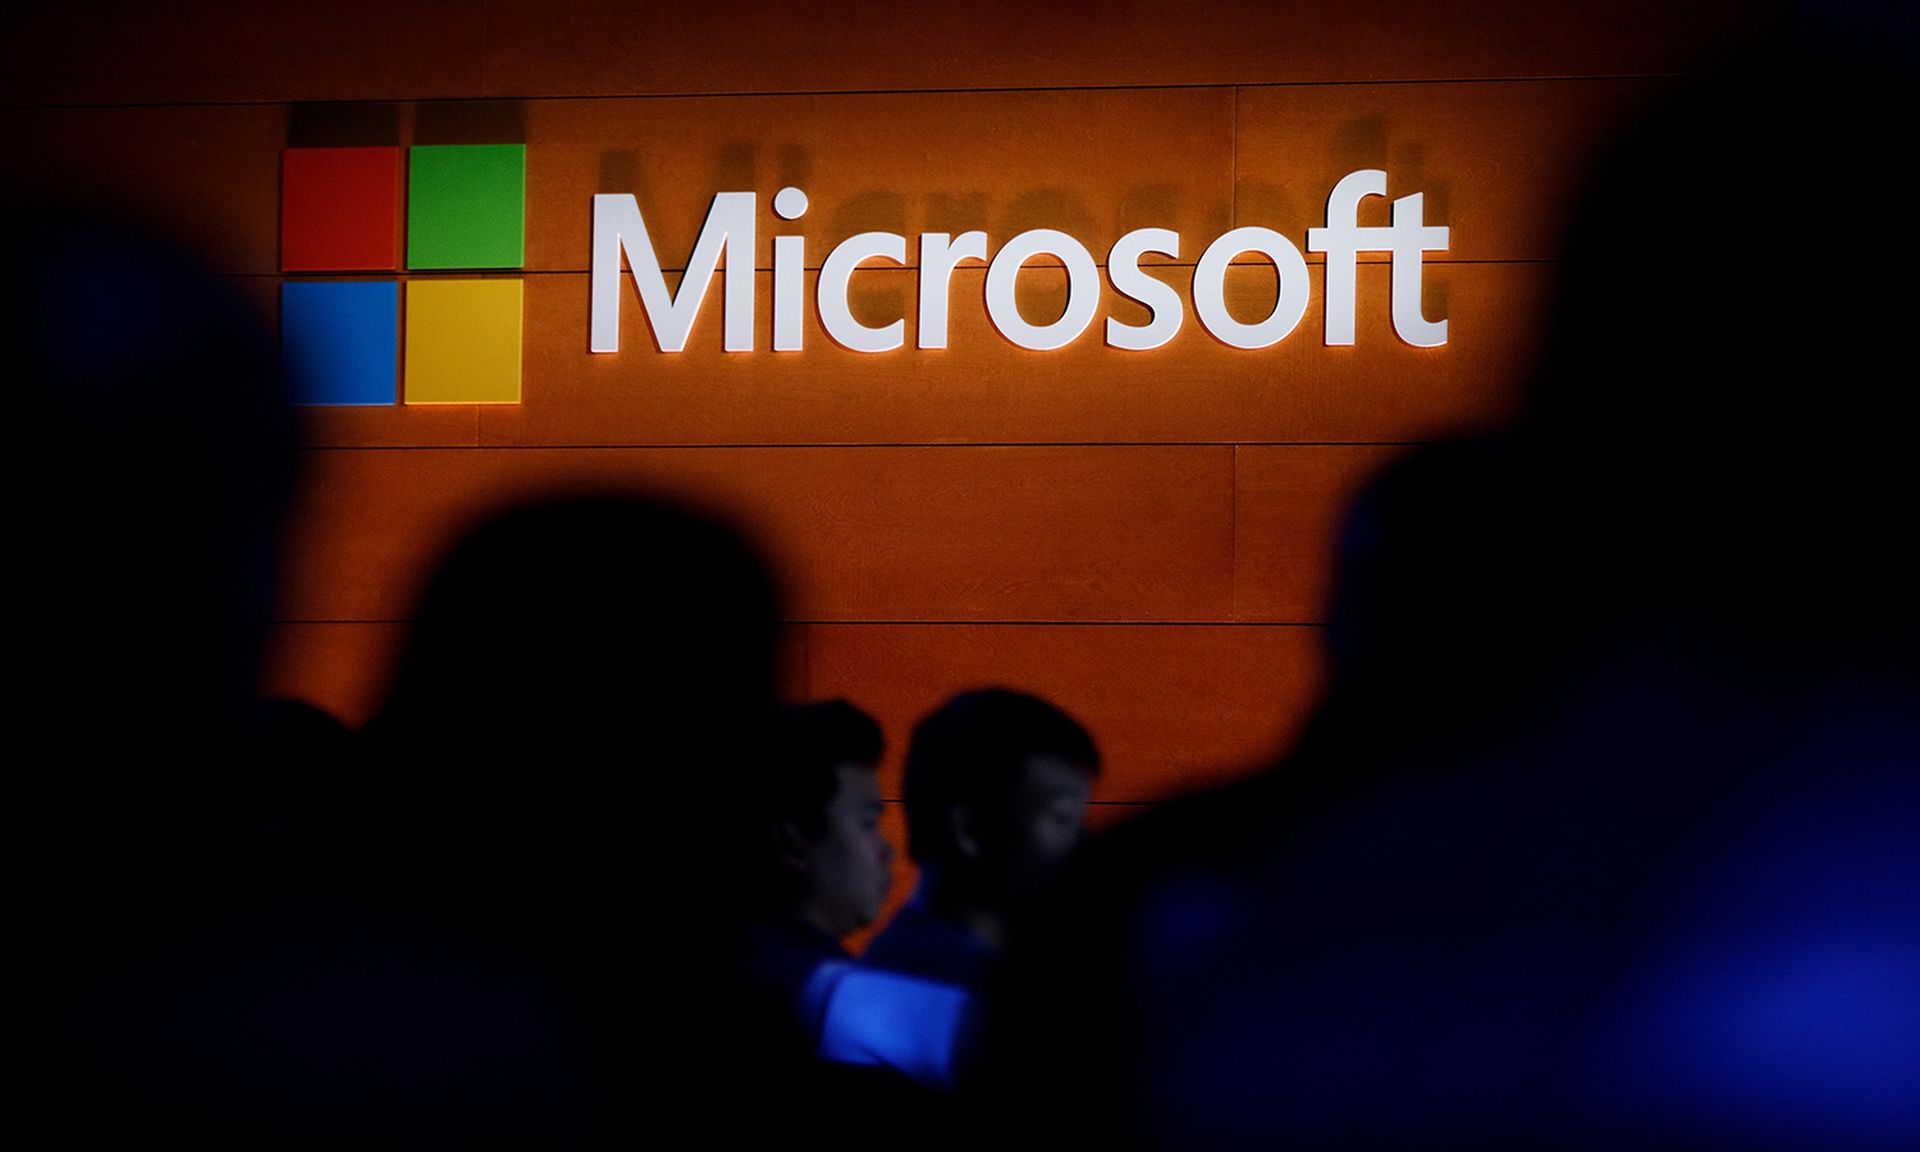 The Microsoft logo is illuminated on a wall